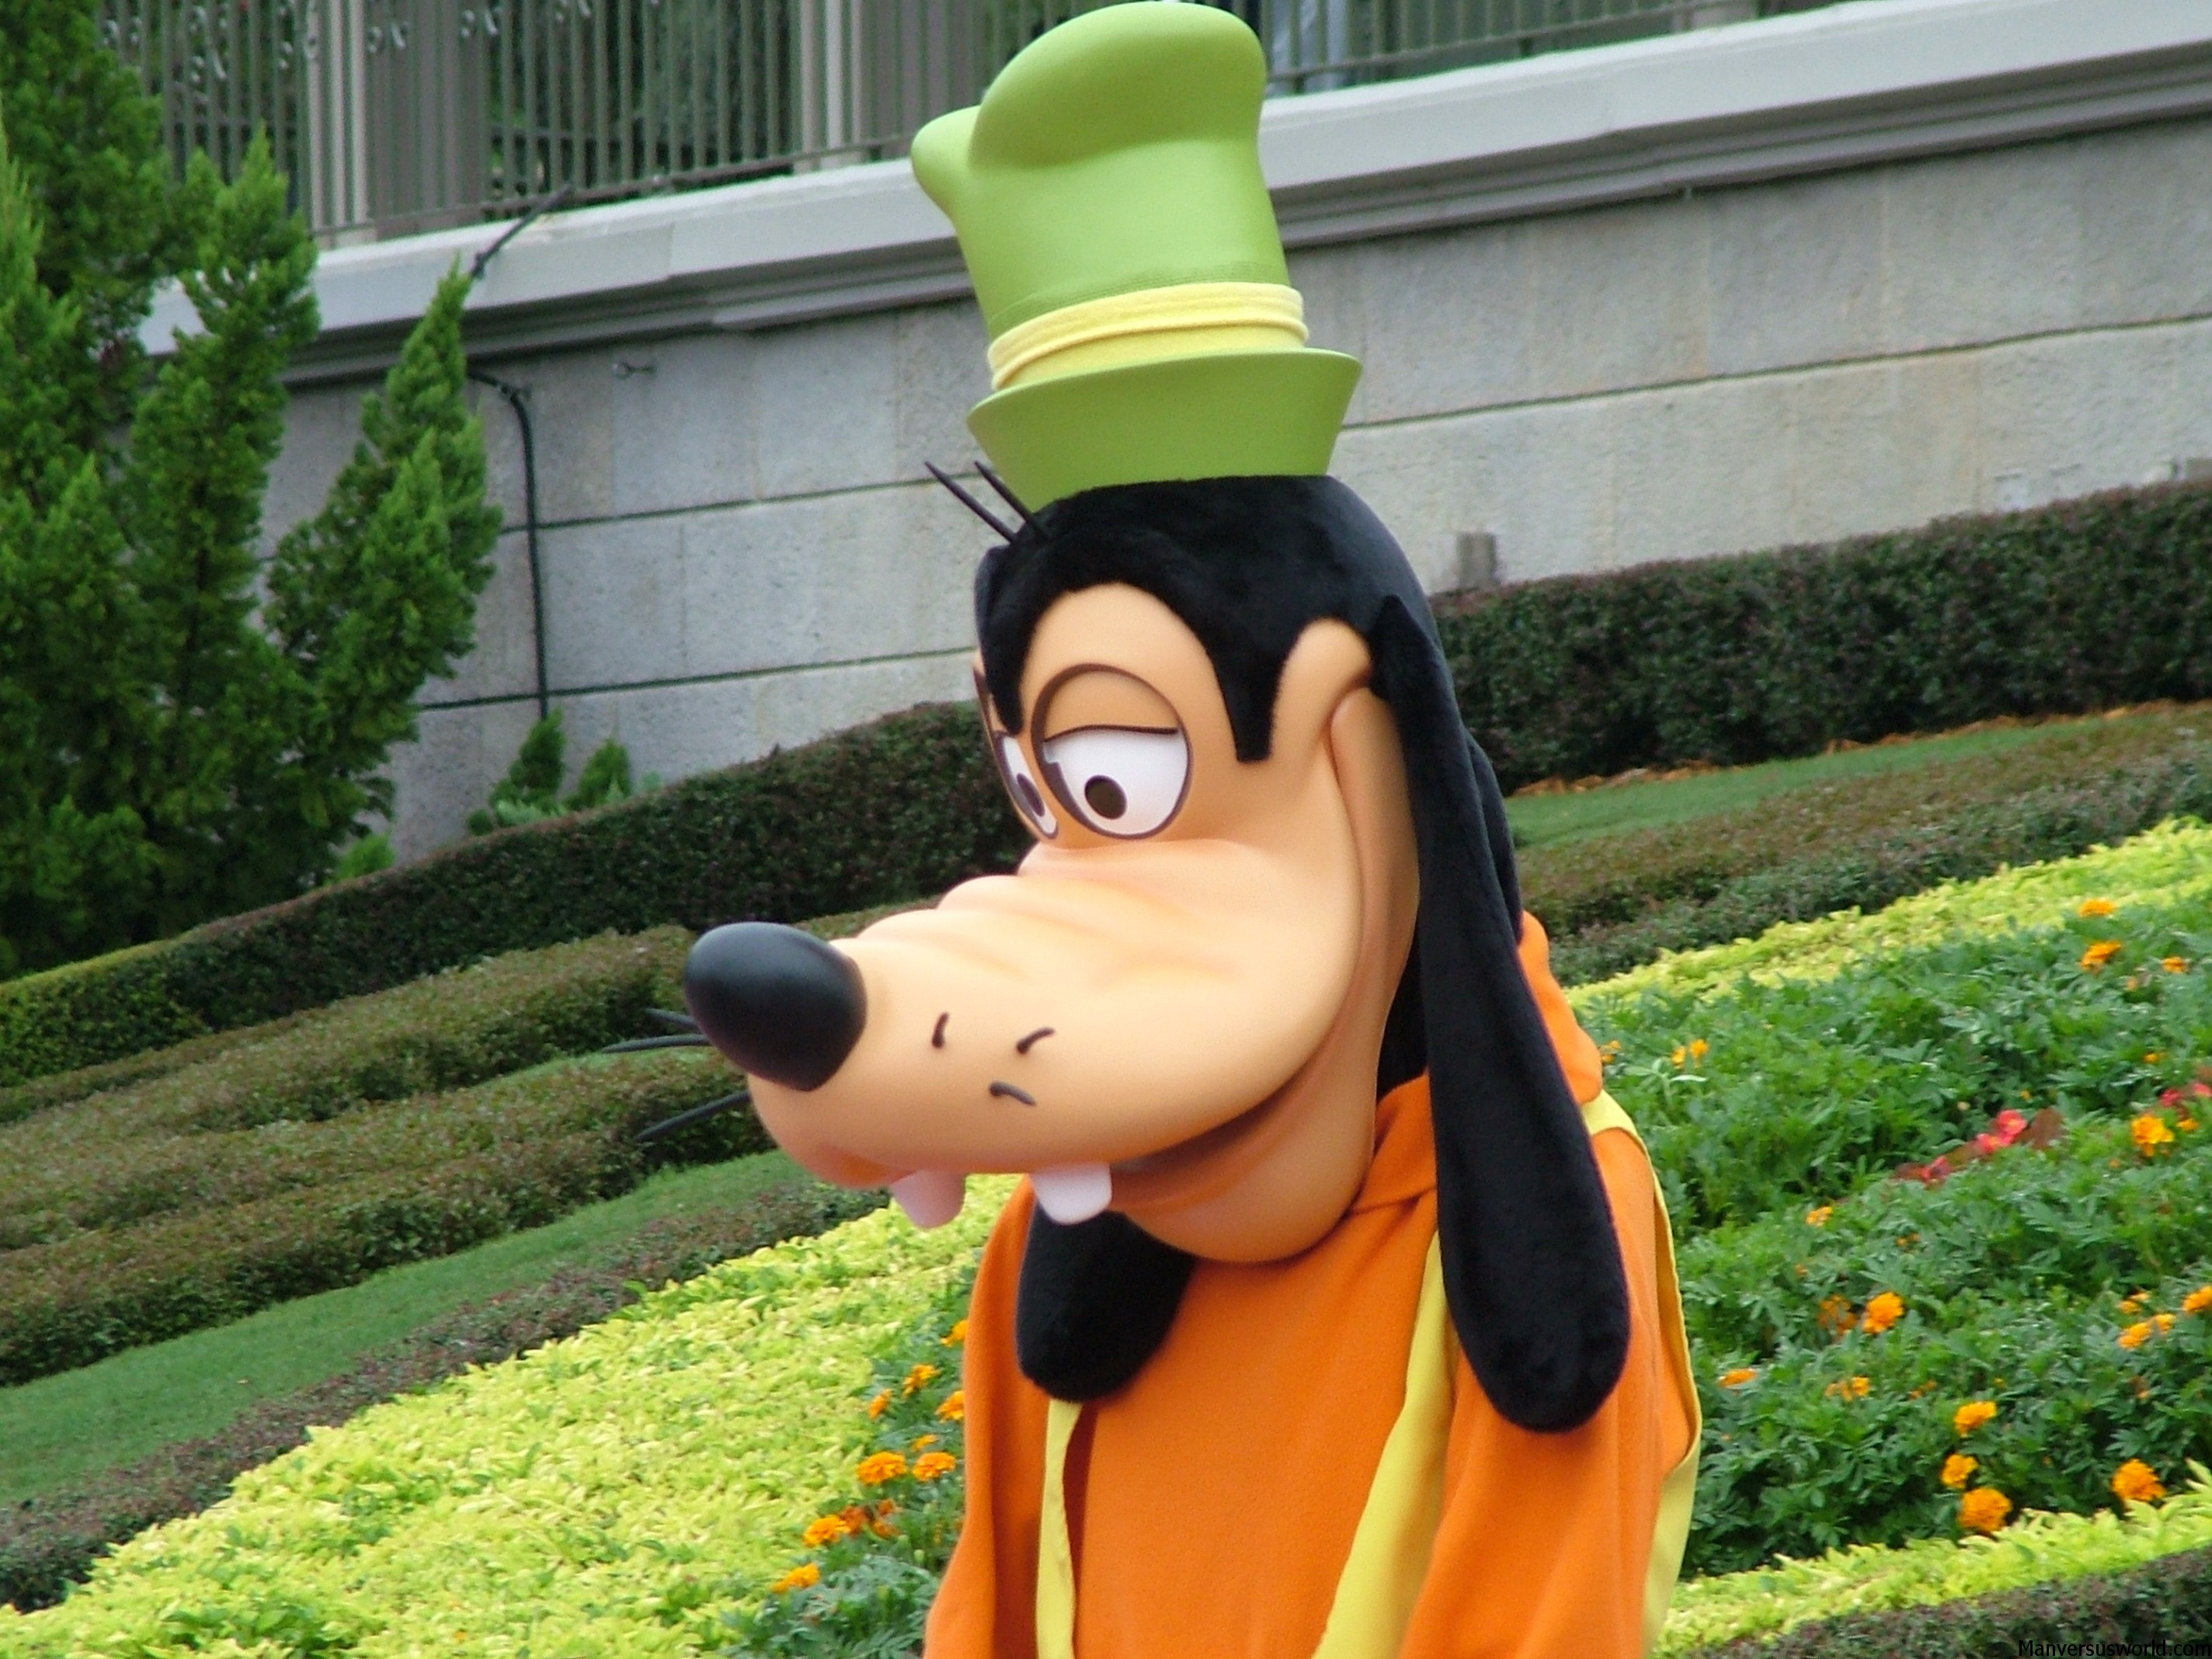 Goofy at Disneyland Paris